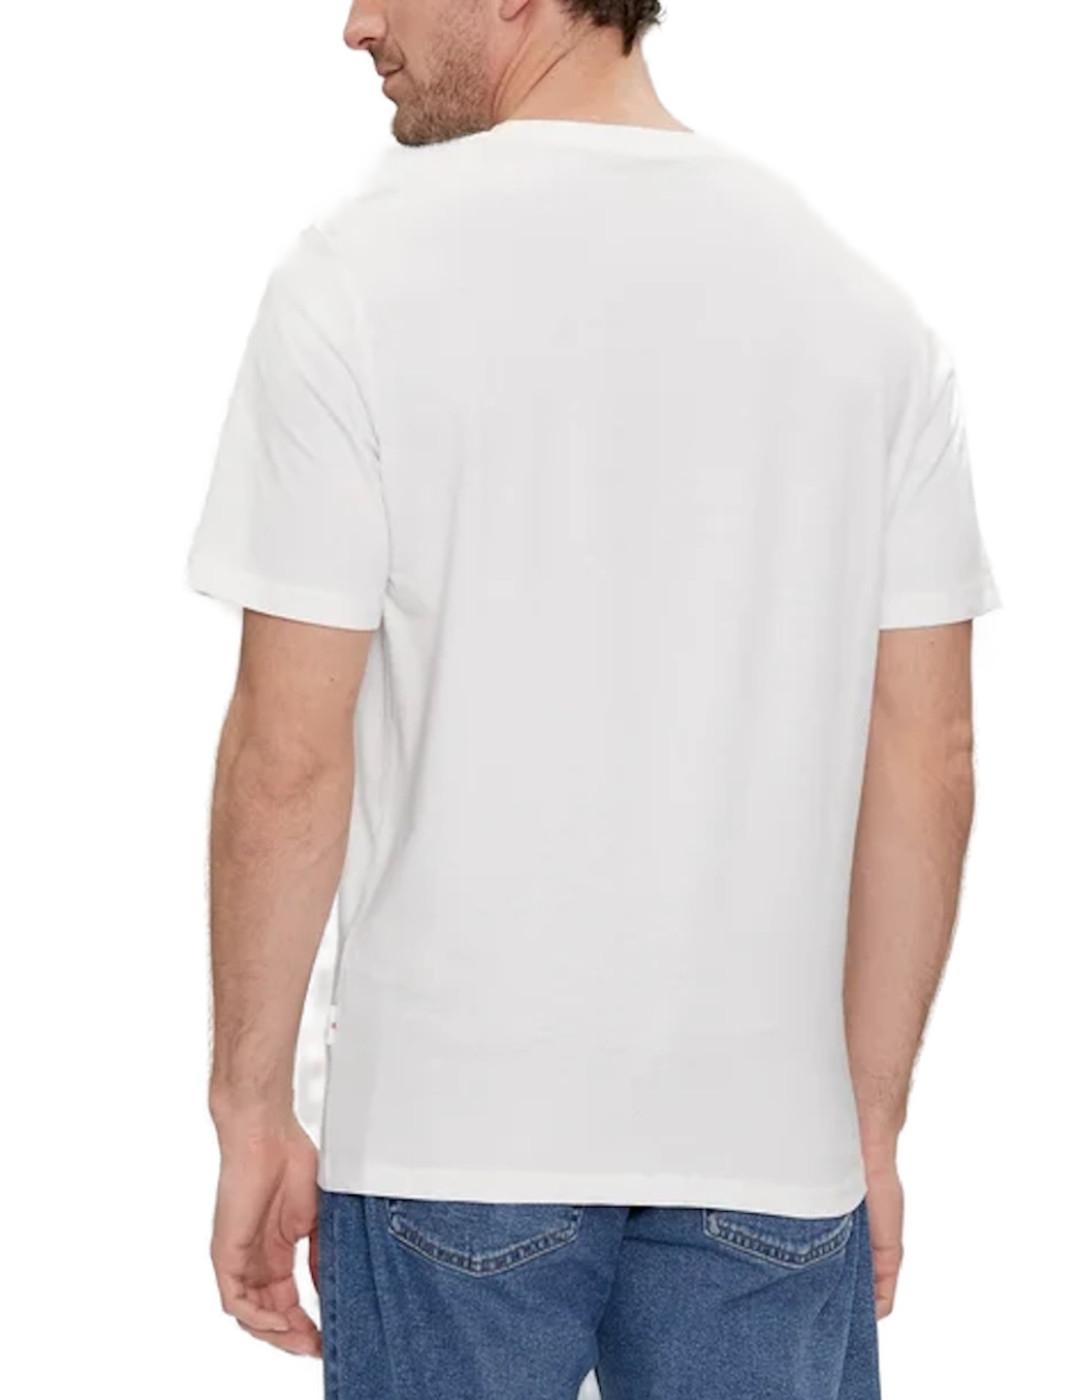 Camiseta Jack&Jones Casey blanco manga corta para hombre